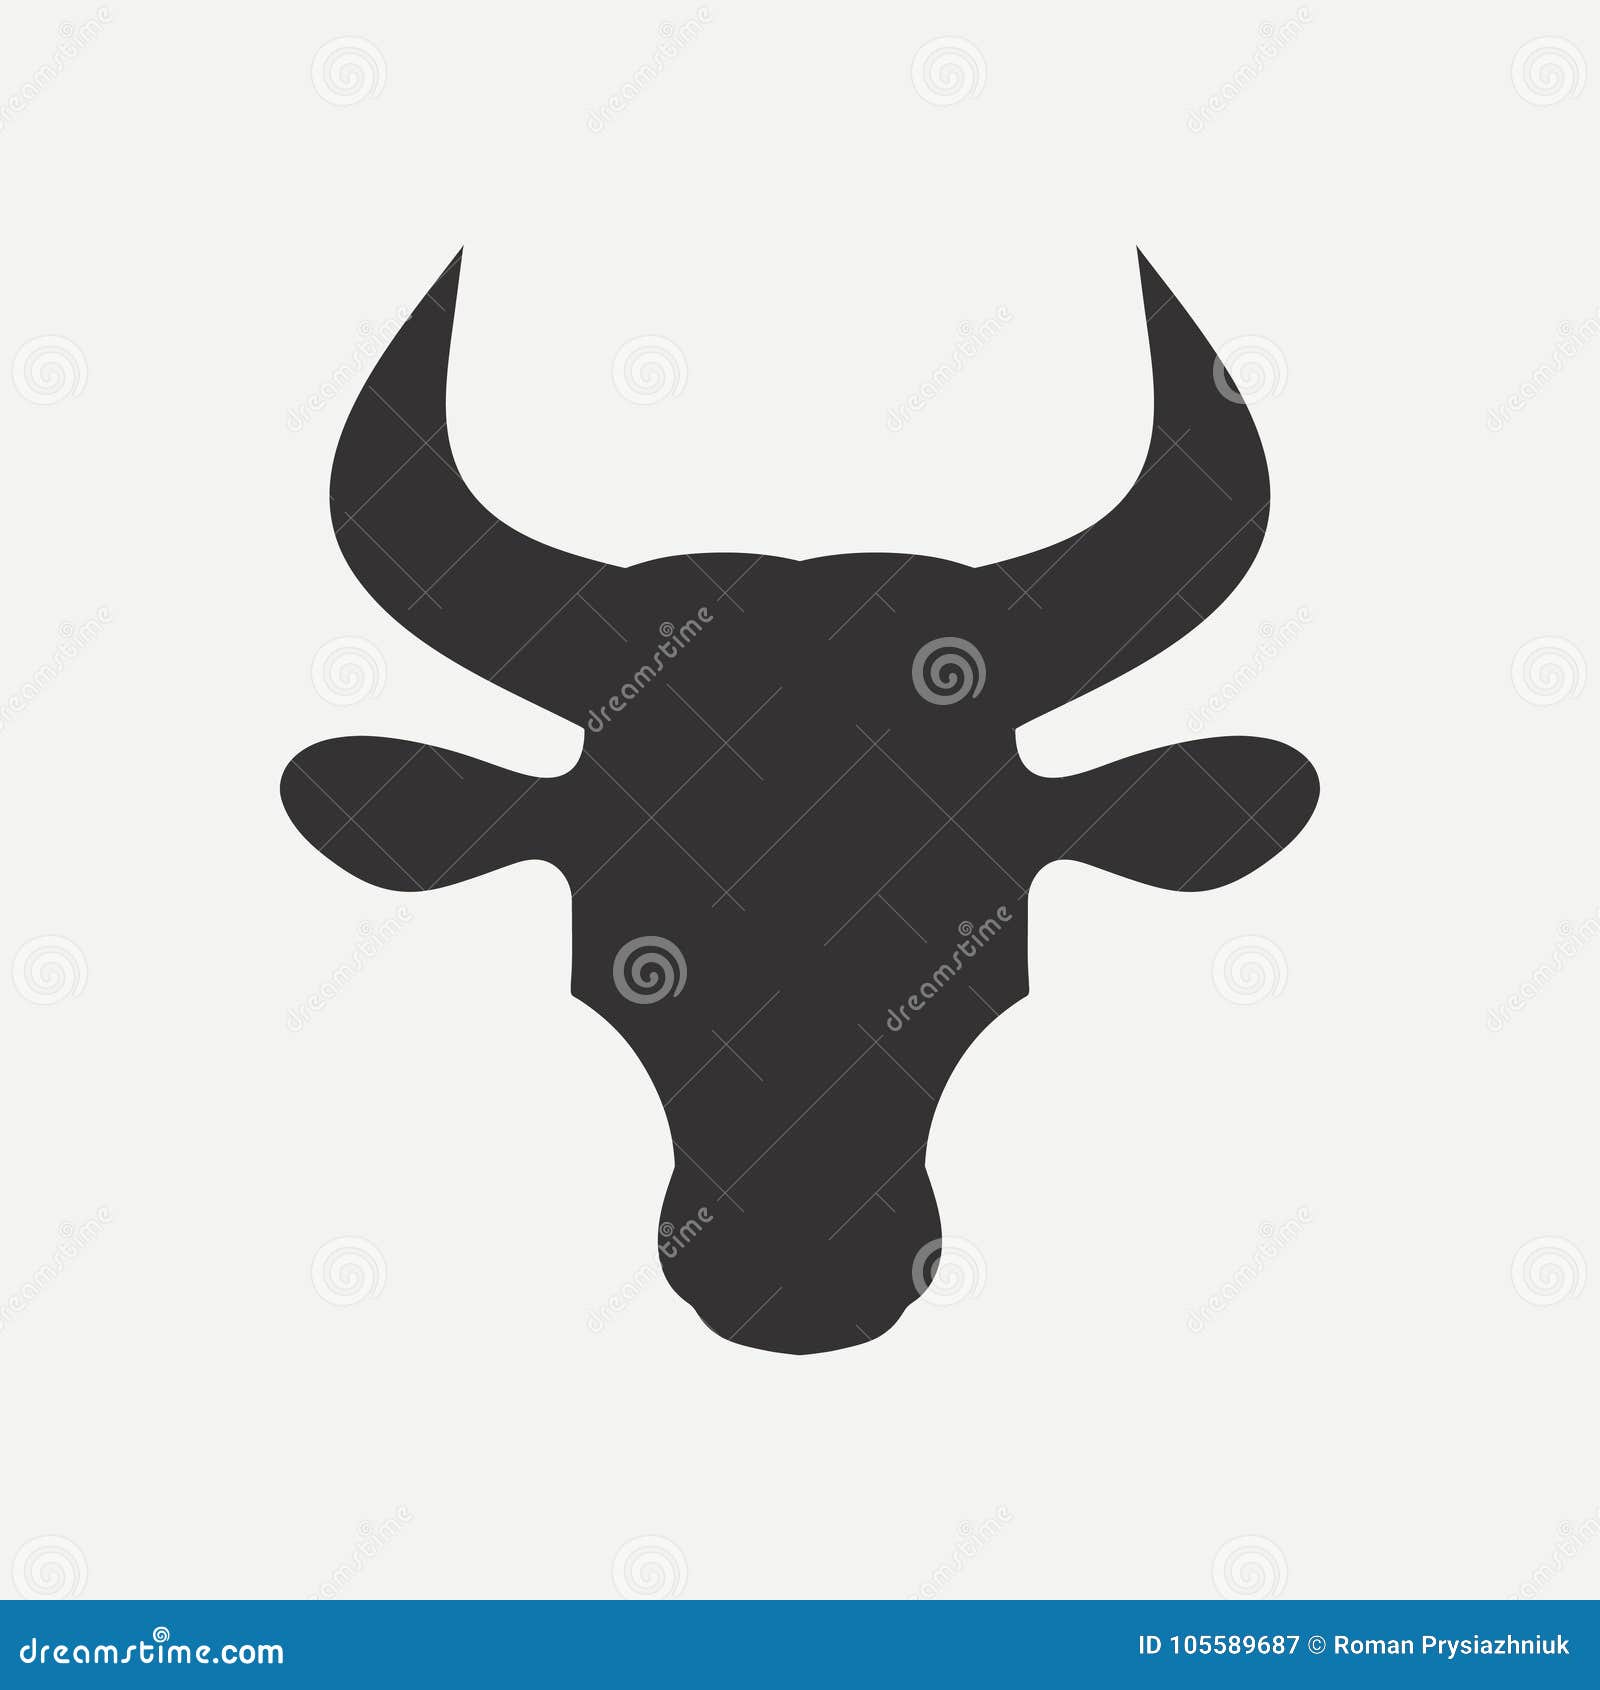 bull head icon with horns. .